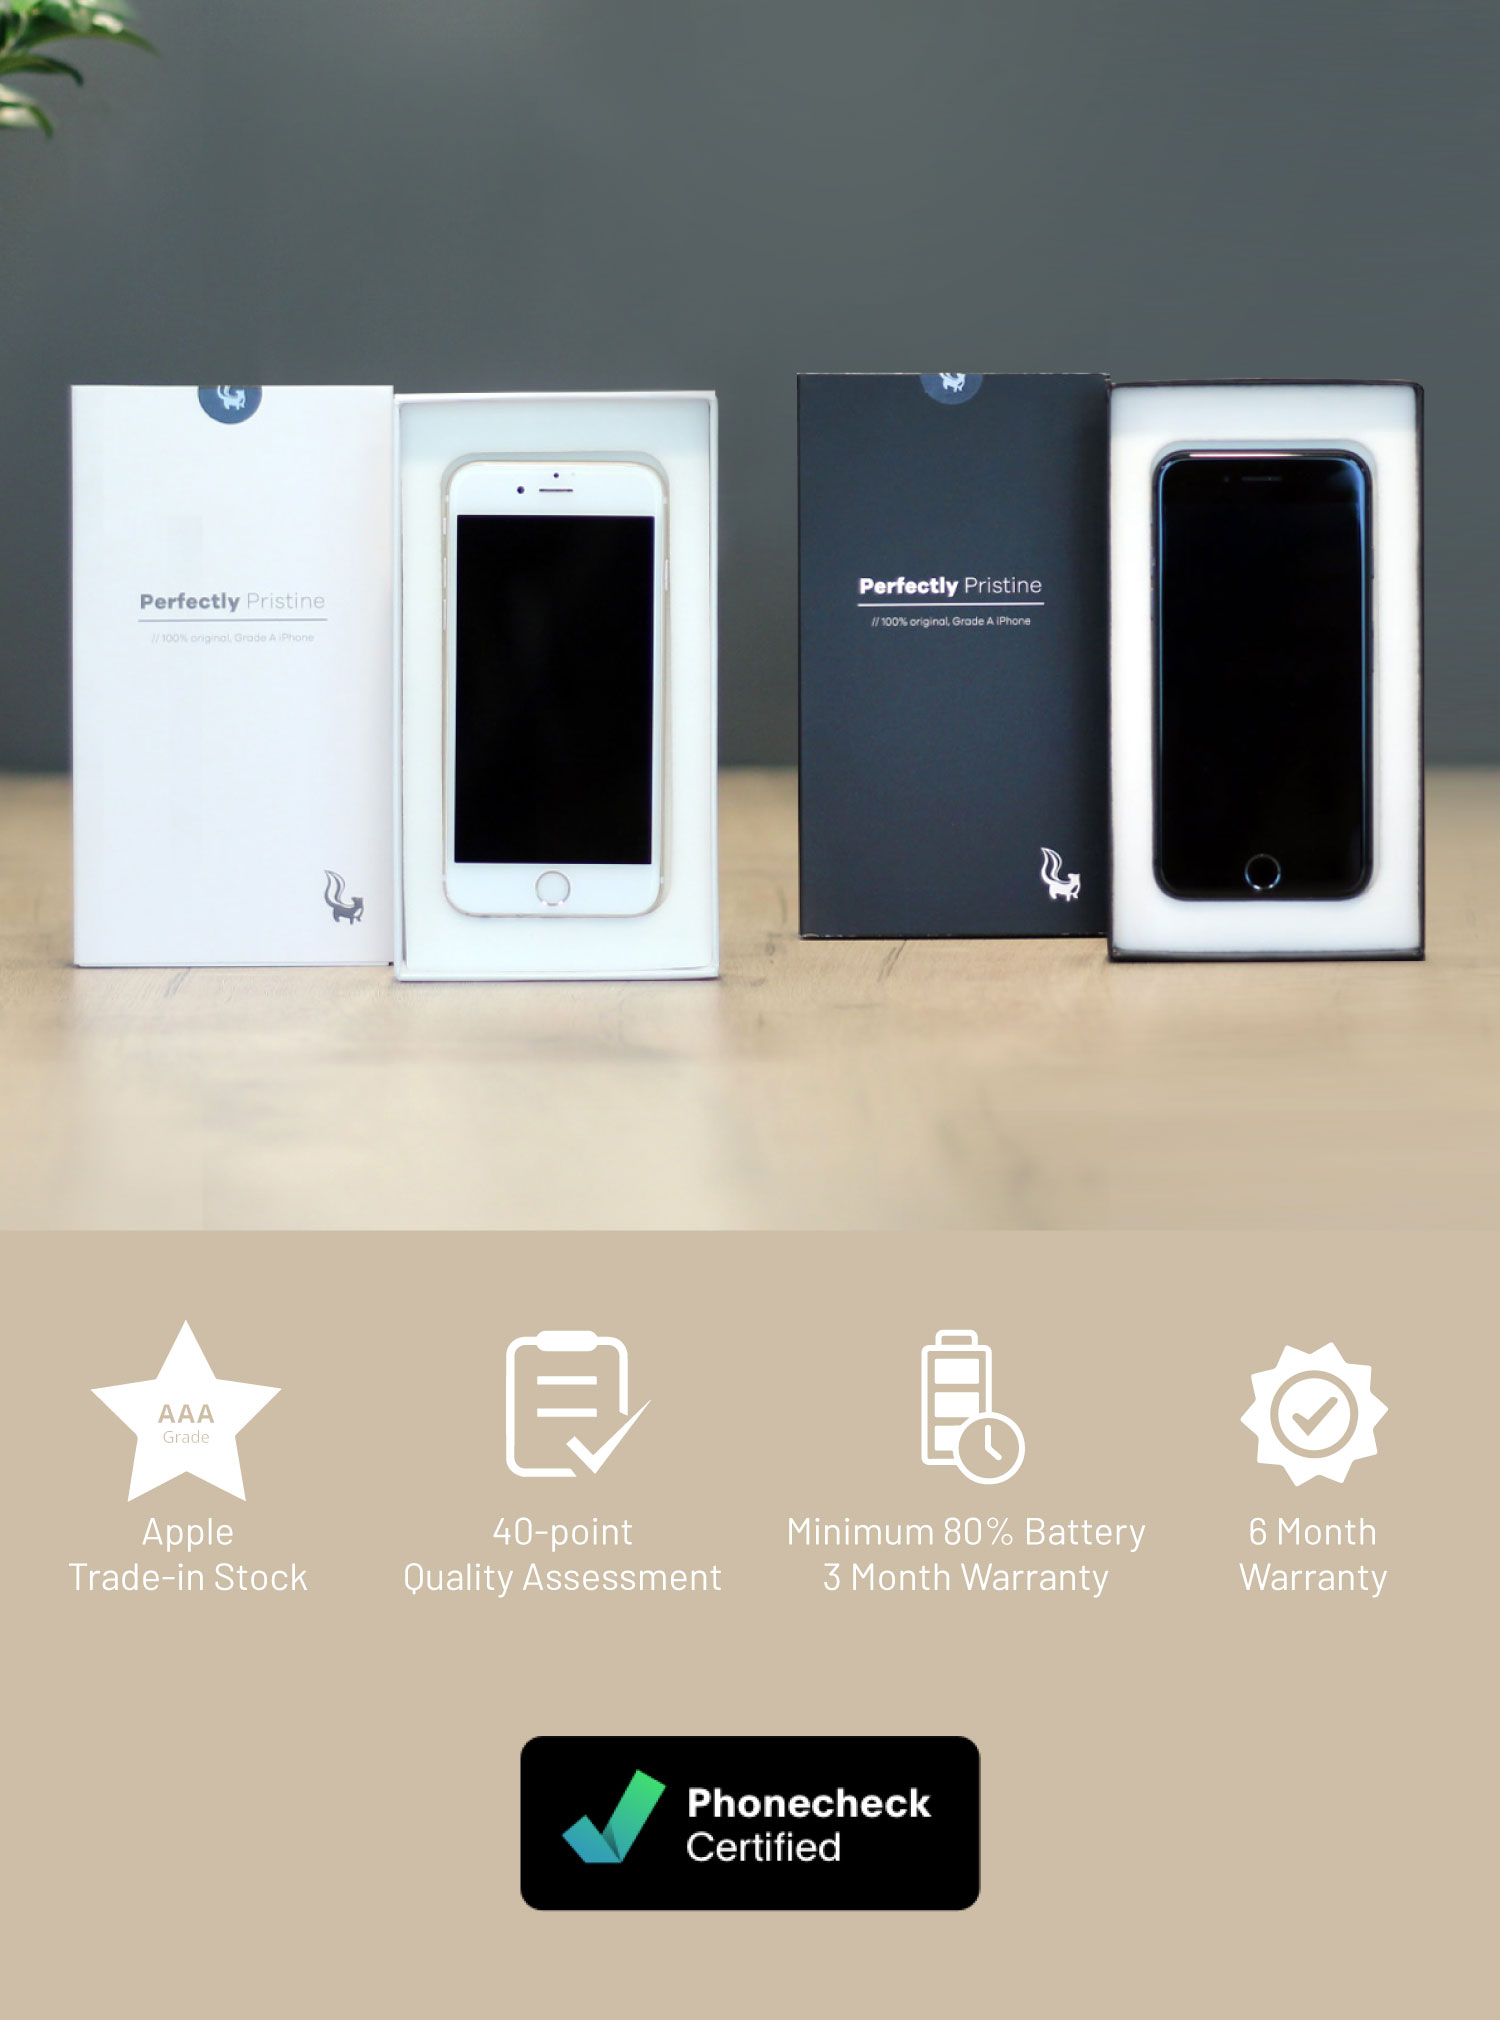 Perfectly Pristine Phone Banner Black phone and White Phone